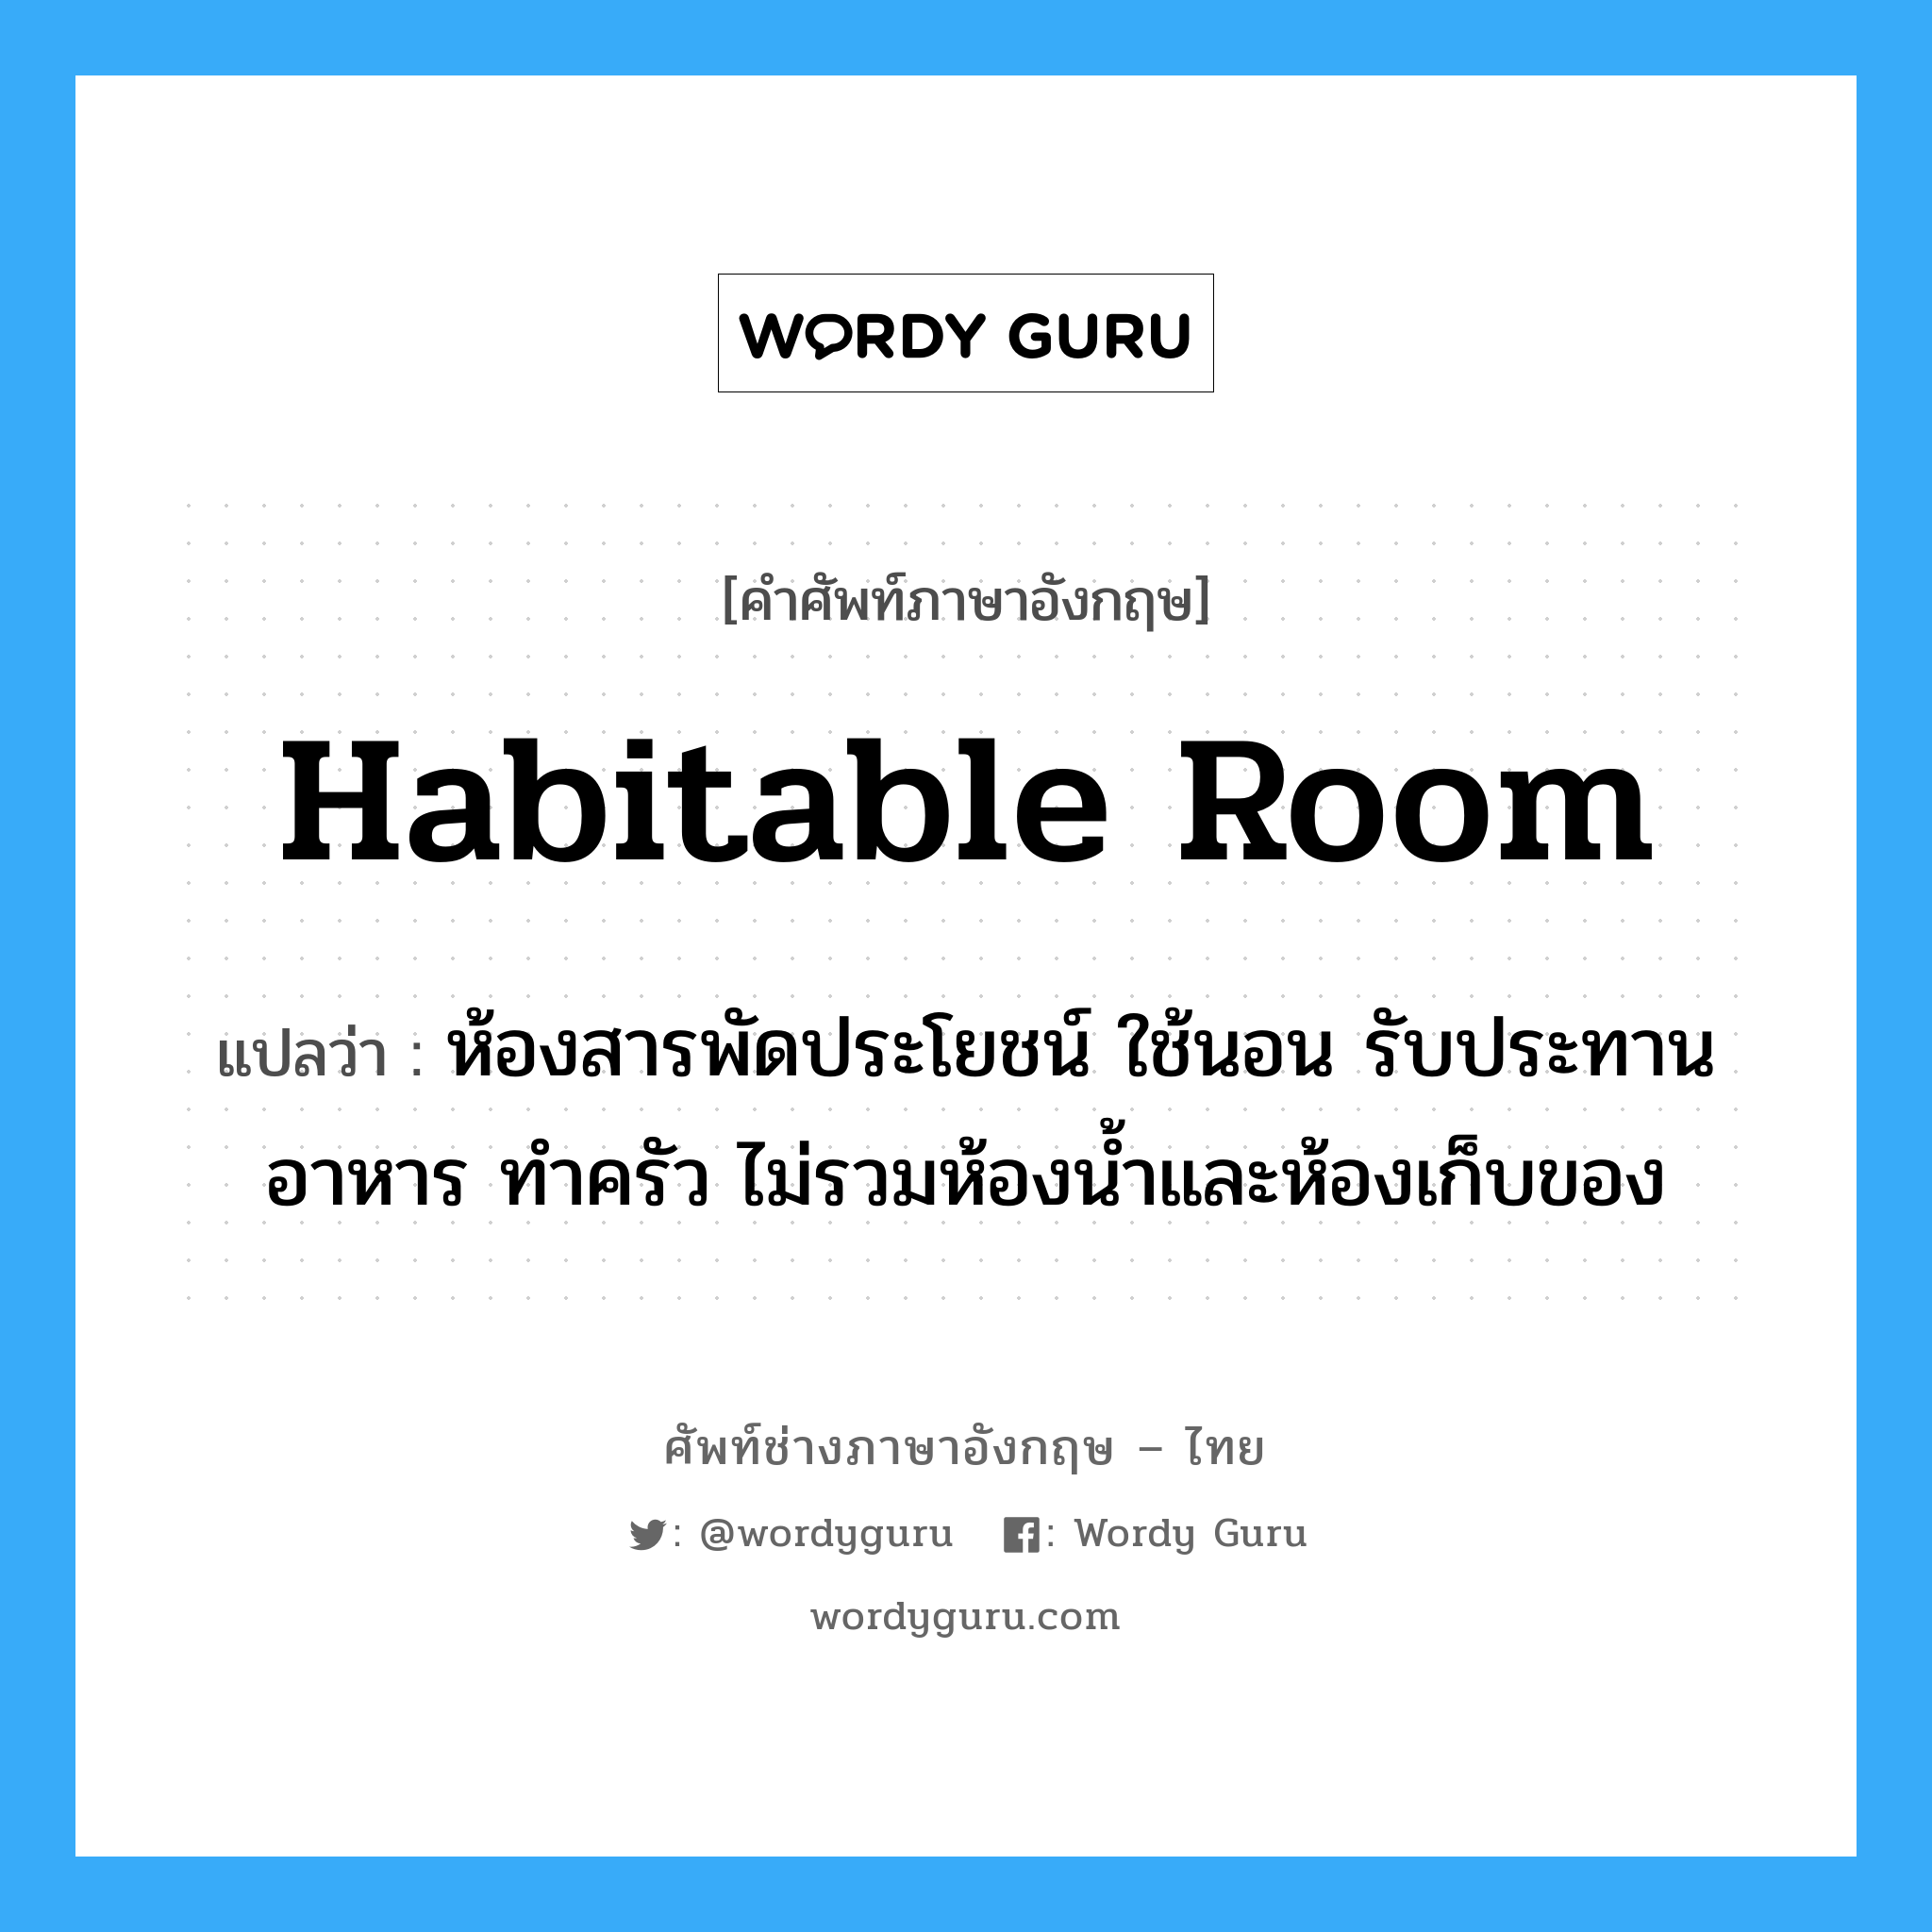 habitable room แปลว่า?, คำศัพท์ช่างภาษาอังกฤษ - ไทย habitable room คำศัพท์ภาษาอังกฤษ habitable room แปลว่า ห้องสารพัดประโยชน์ ใช้นอน รับประทานอาหาร ทำครัว ไม่รวมห้องน้ำและห้องเก็บของ